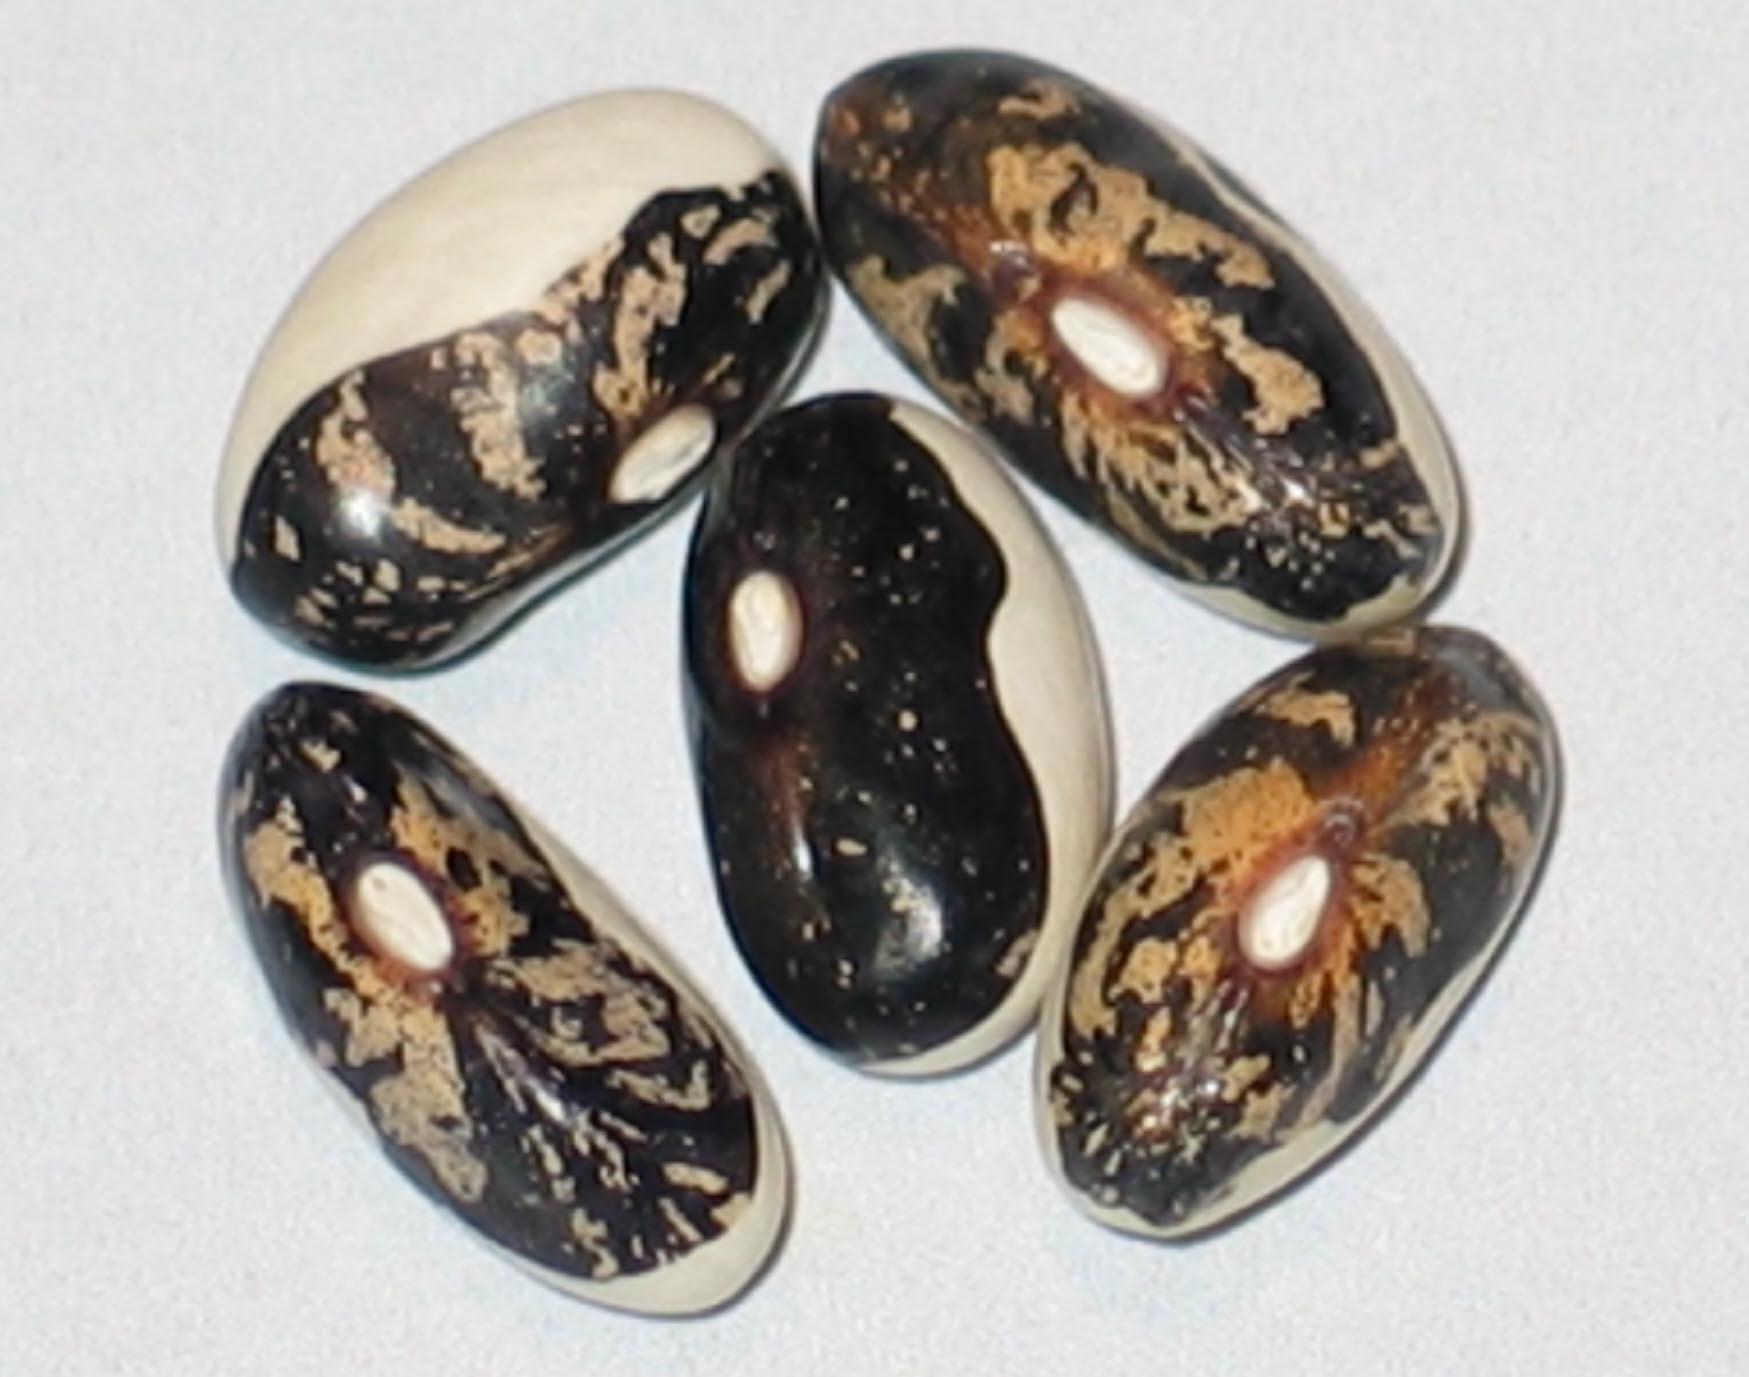 image of Karachaganck beans